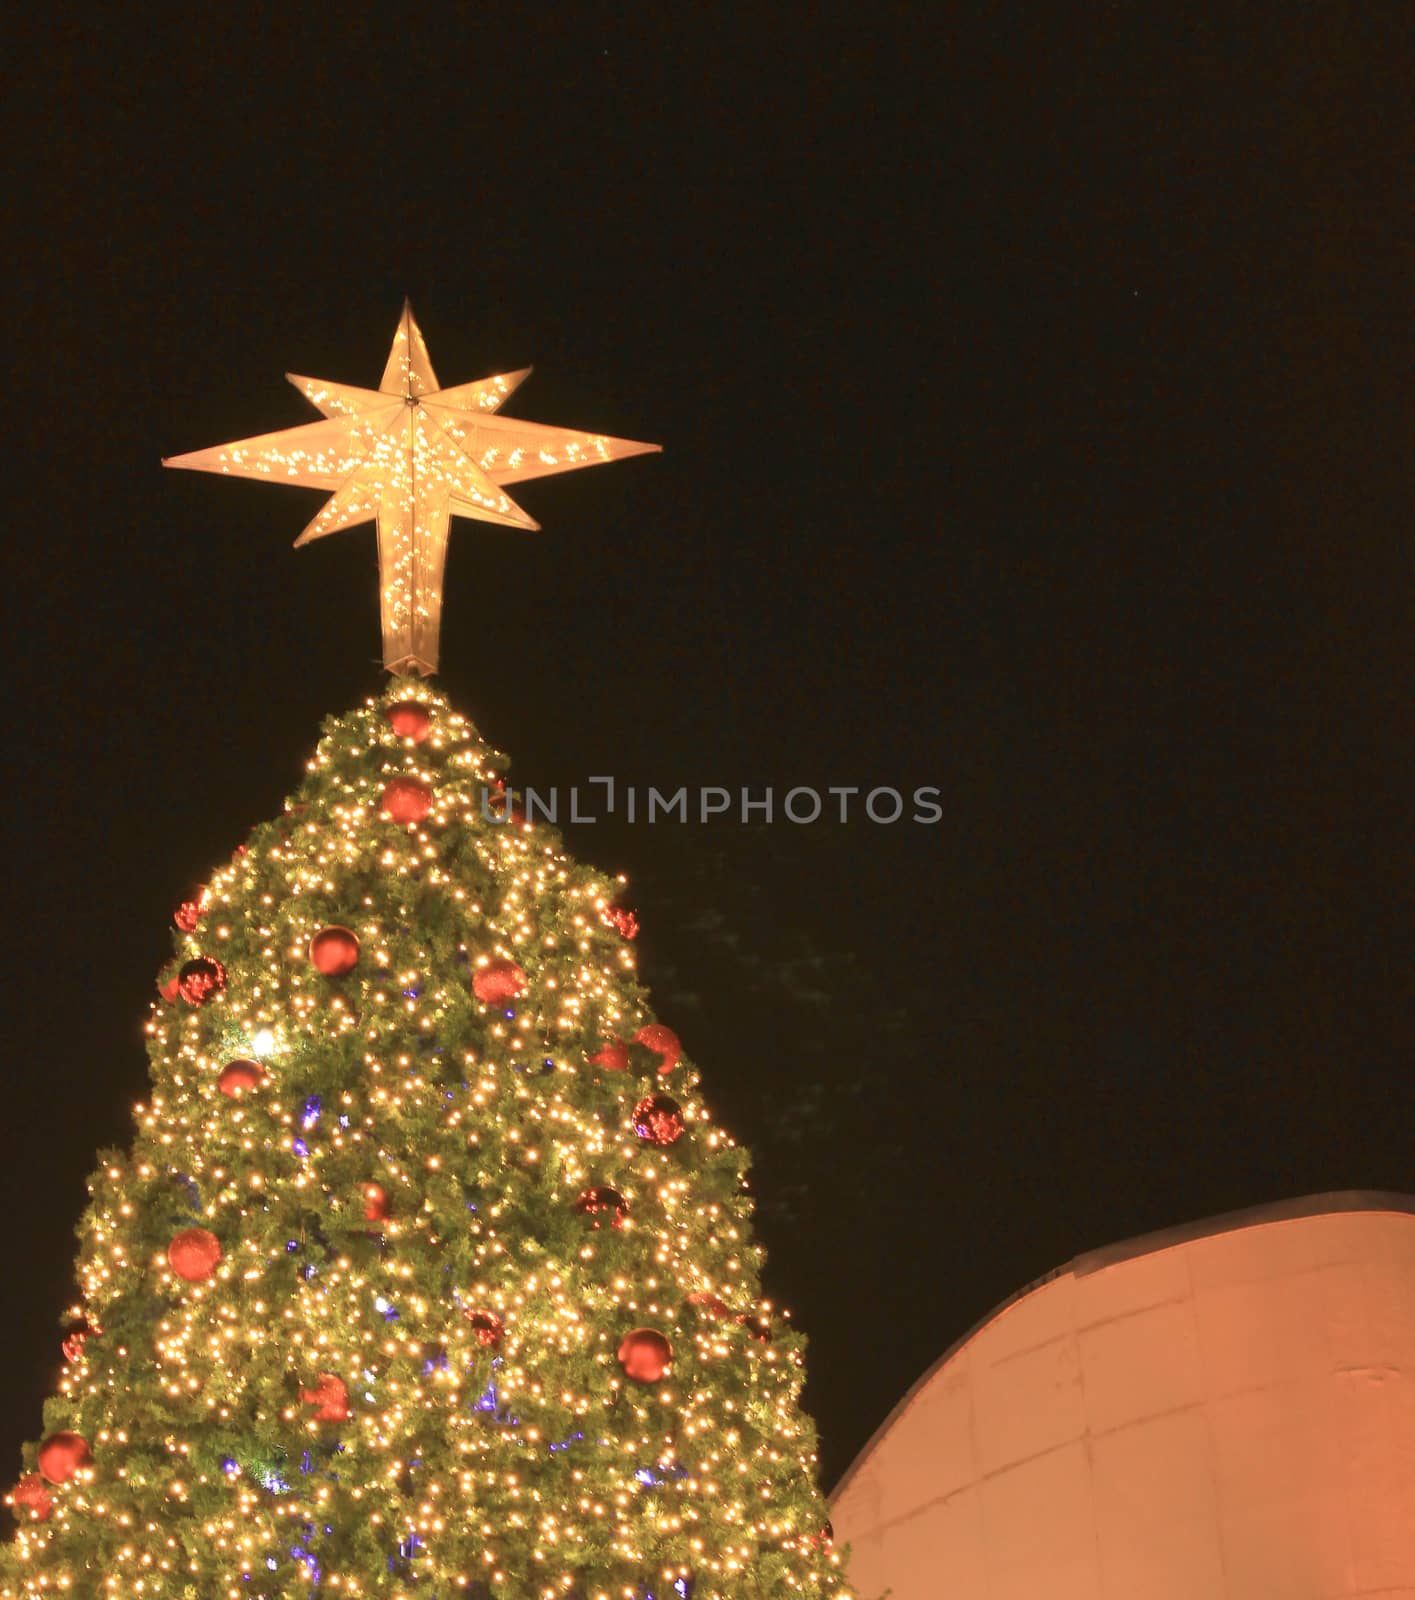 Stars and festive Christmas display. by sittiaut__jansopa